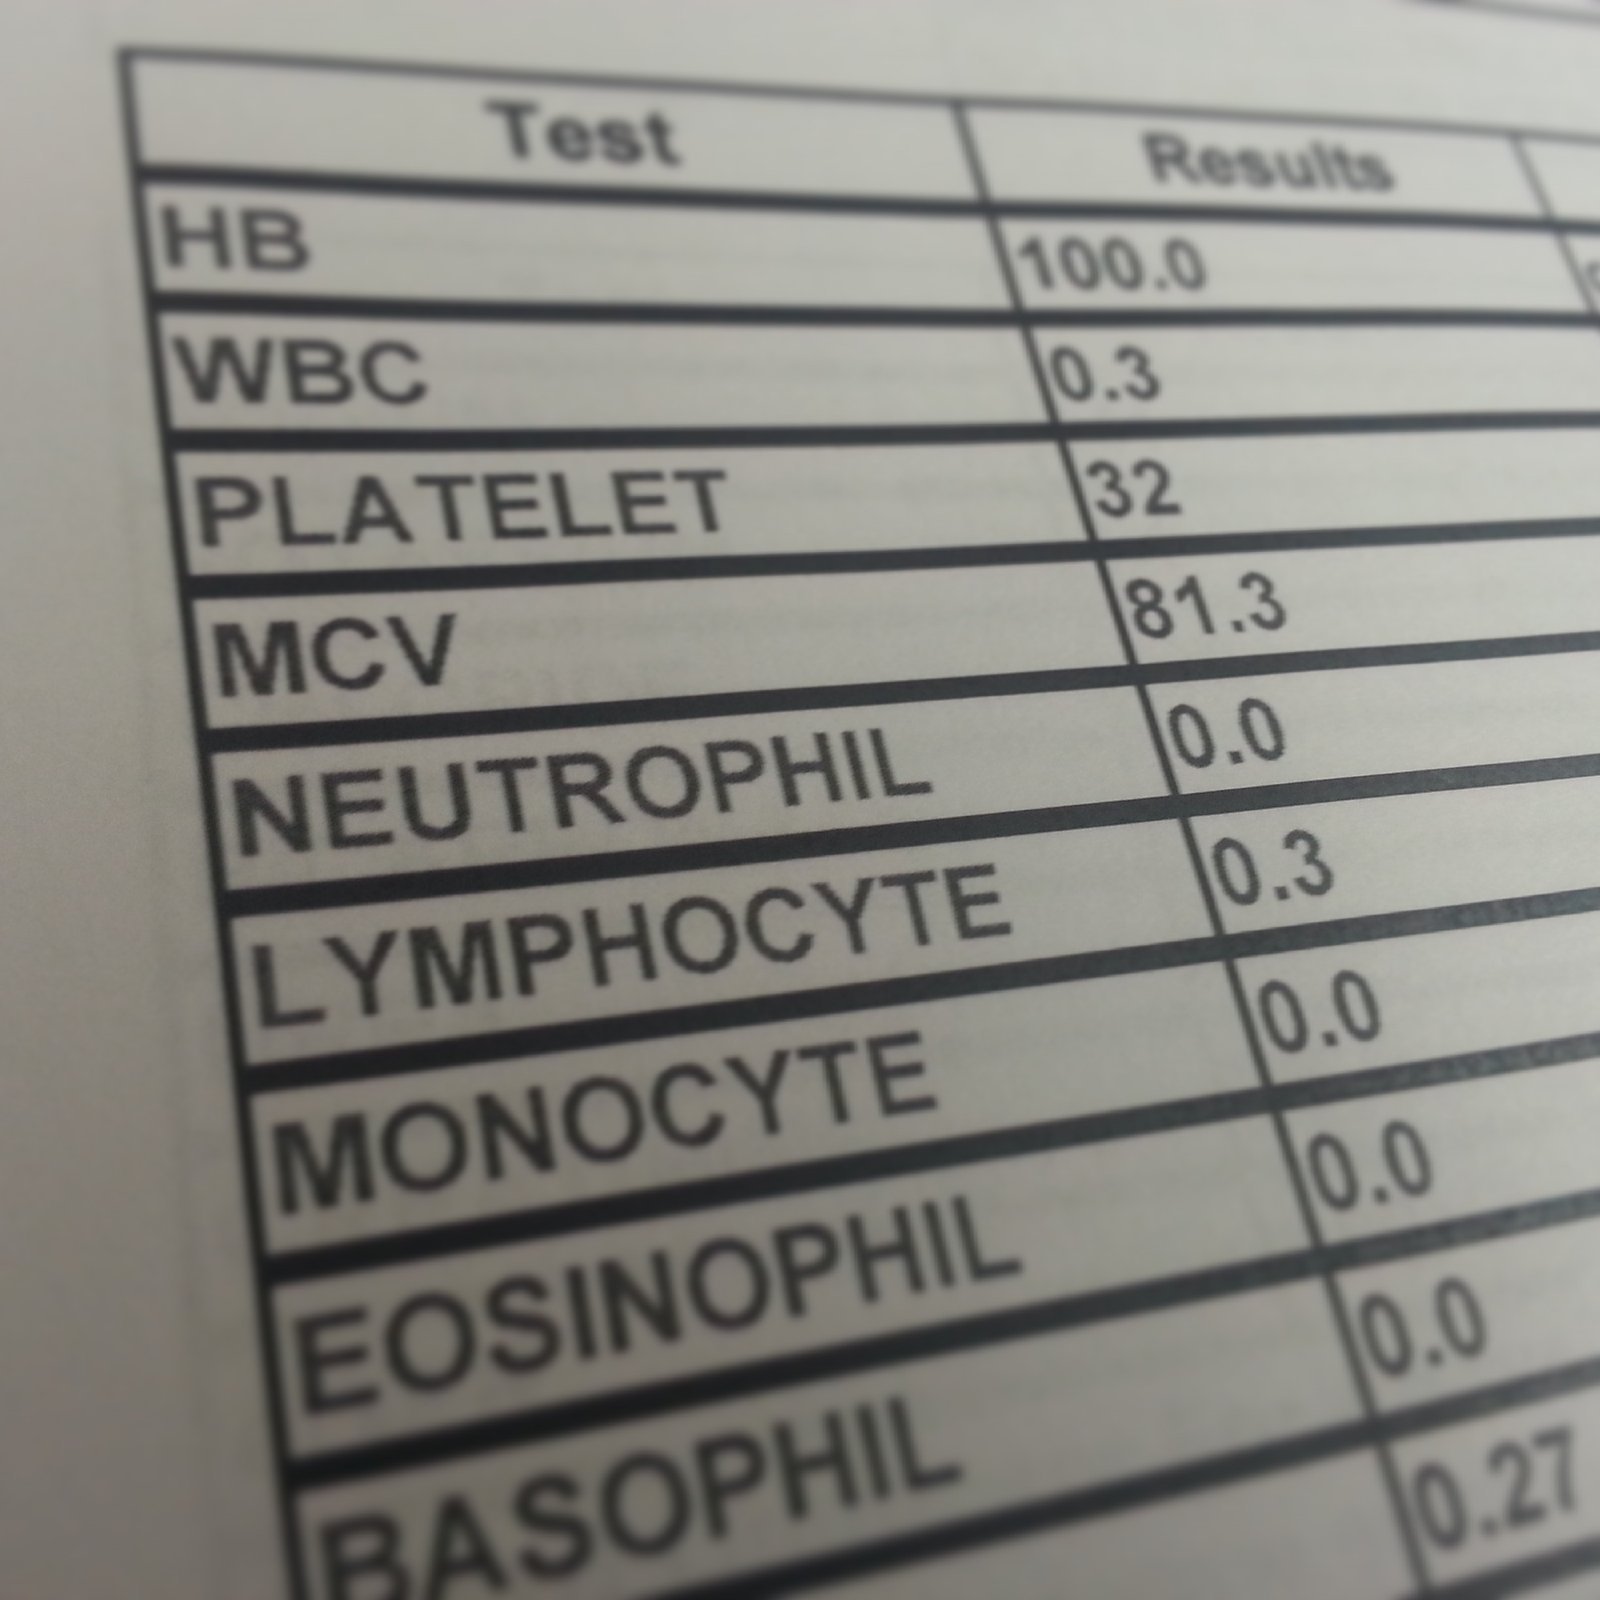 Blood counts, including 0.0 neutrophils